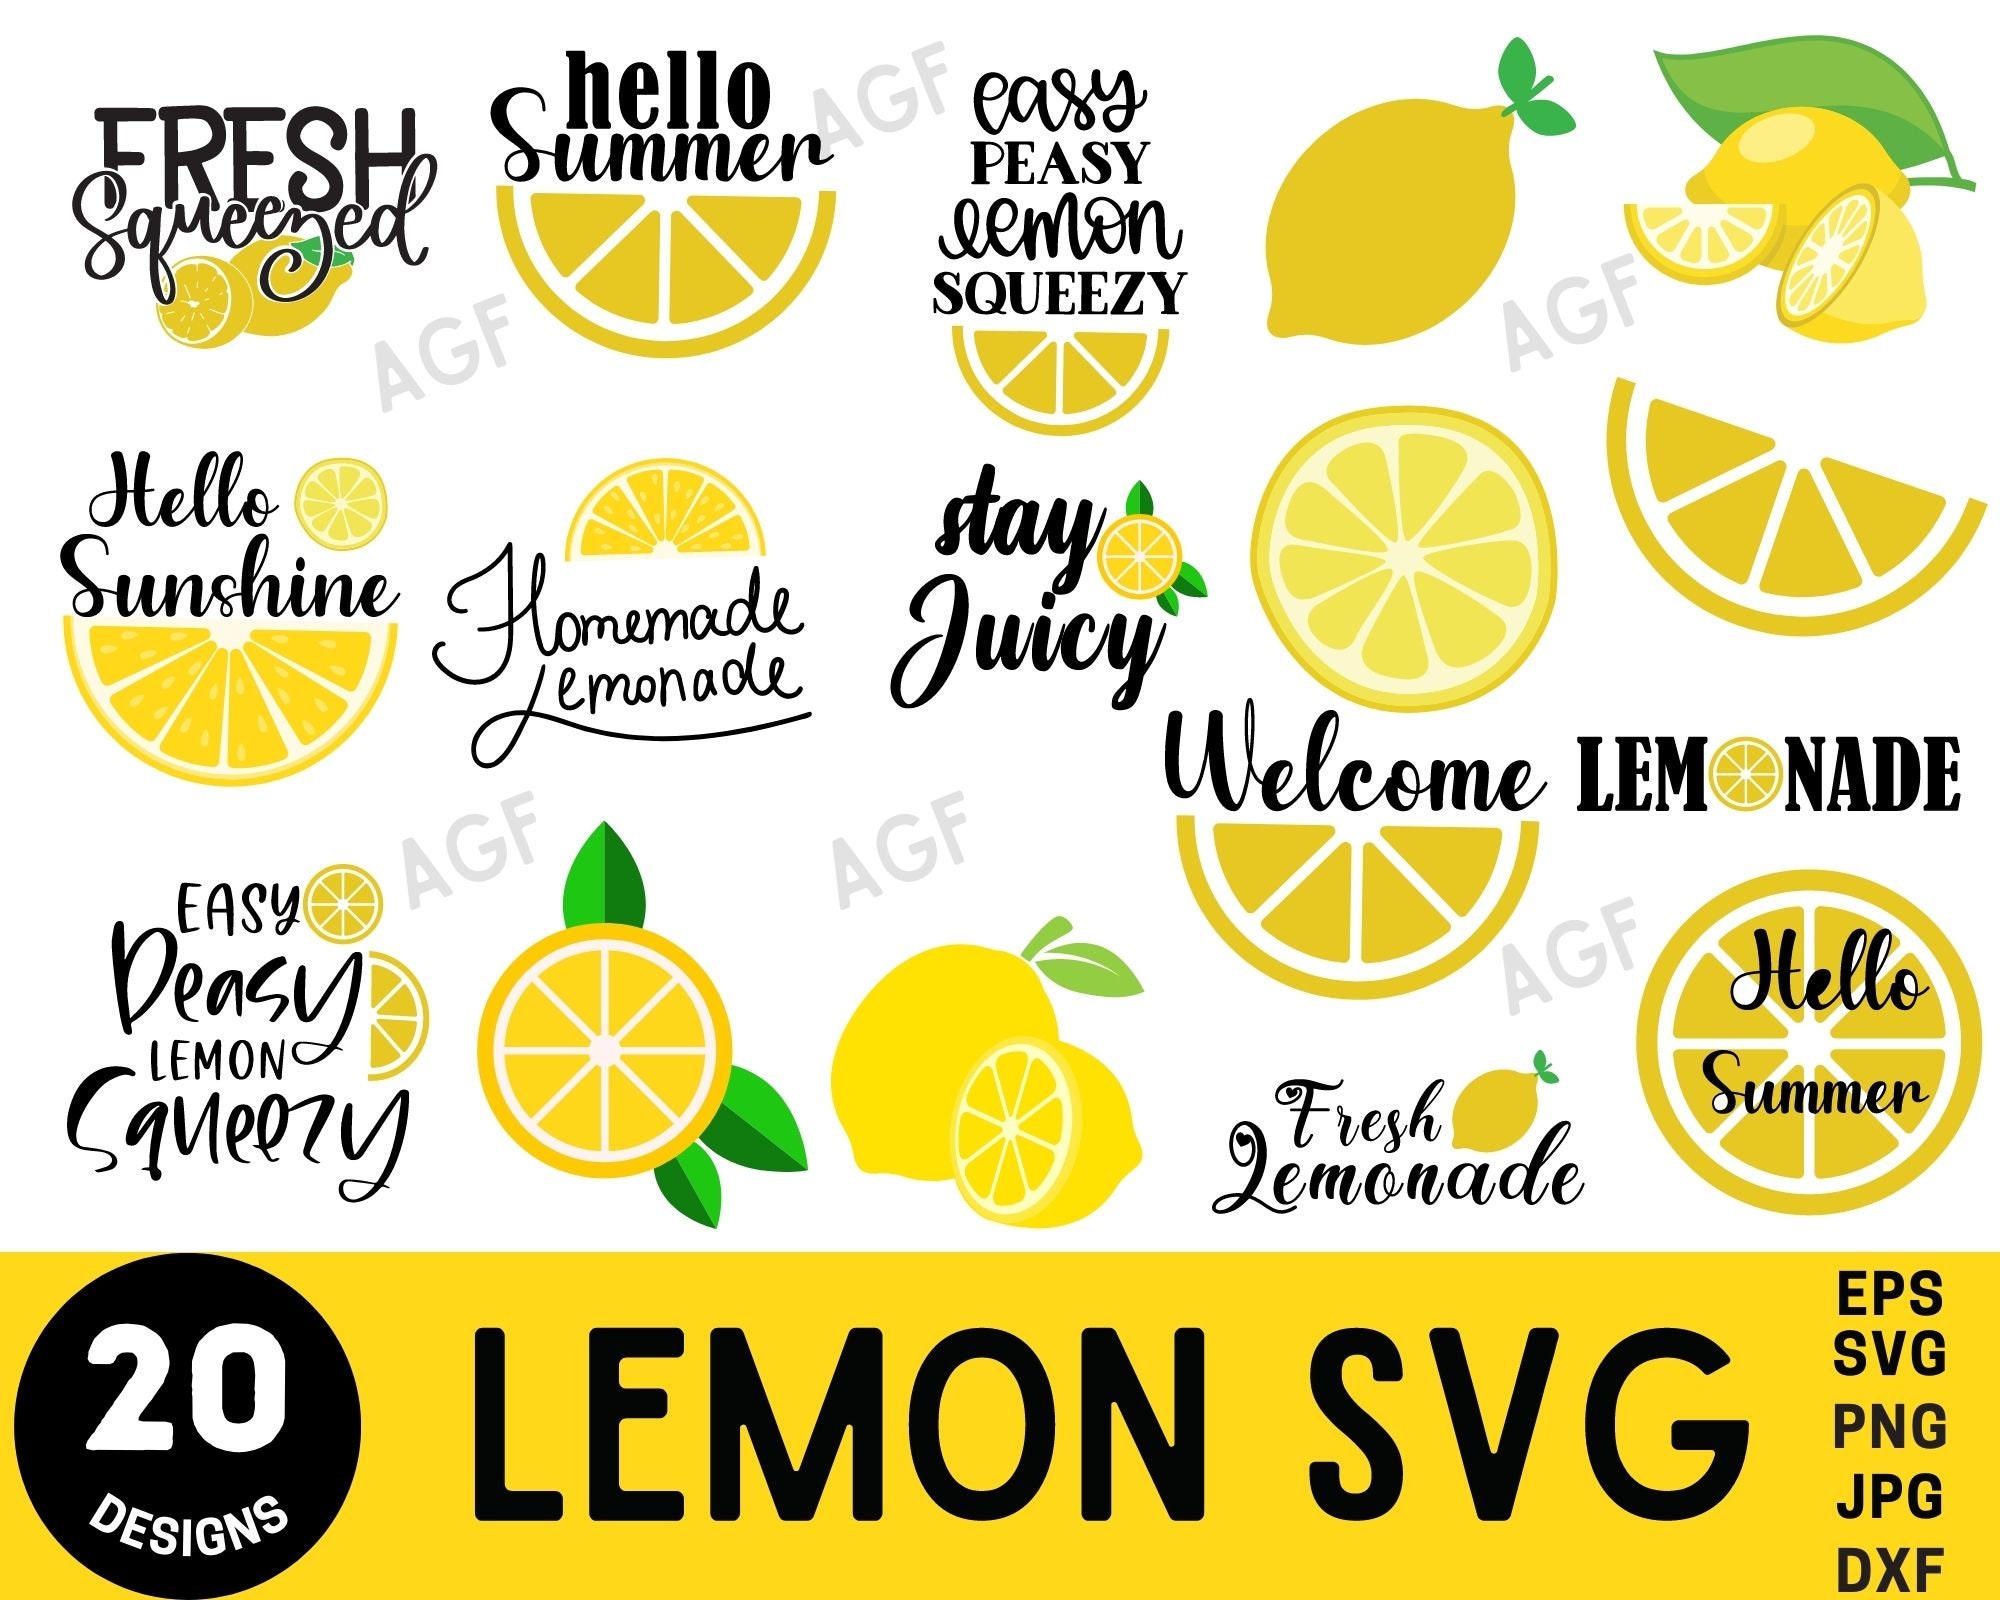 Sweet Summer - Lemonade Pitcher - Lori Whitlock's SVG Shop